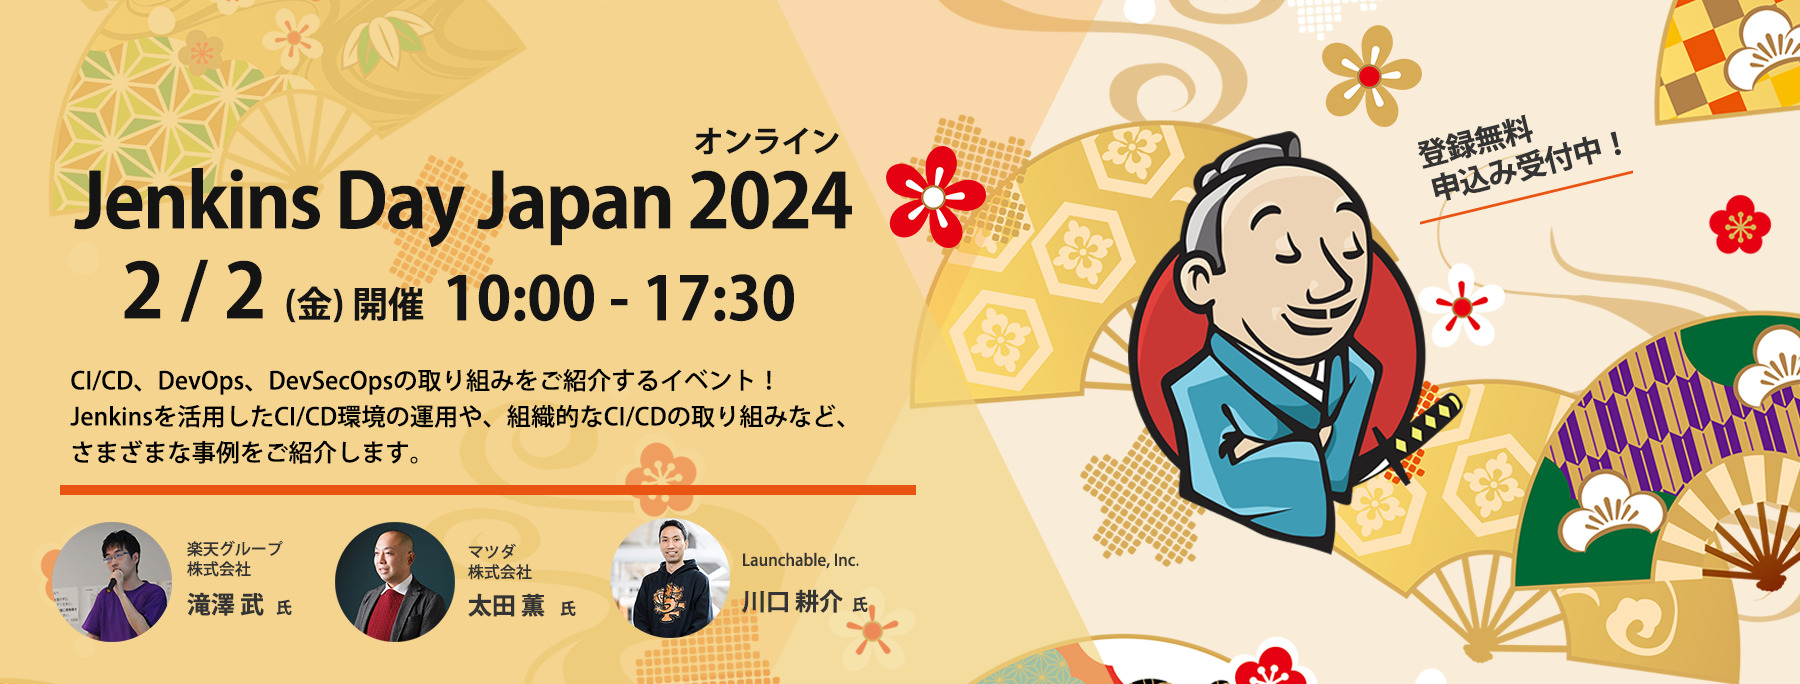 Jenkins Day Japan 2024